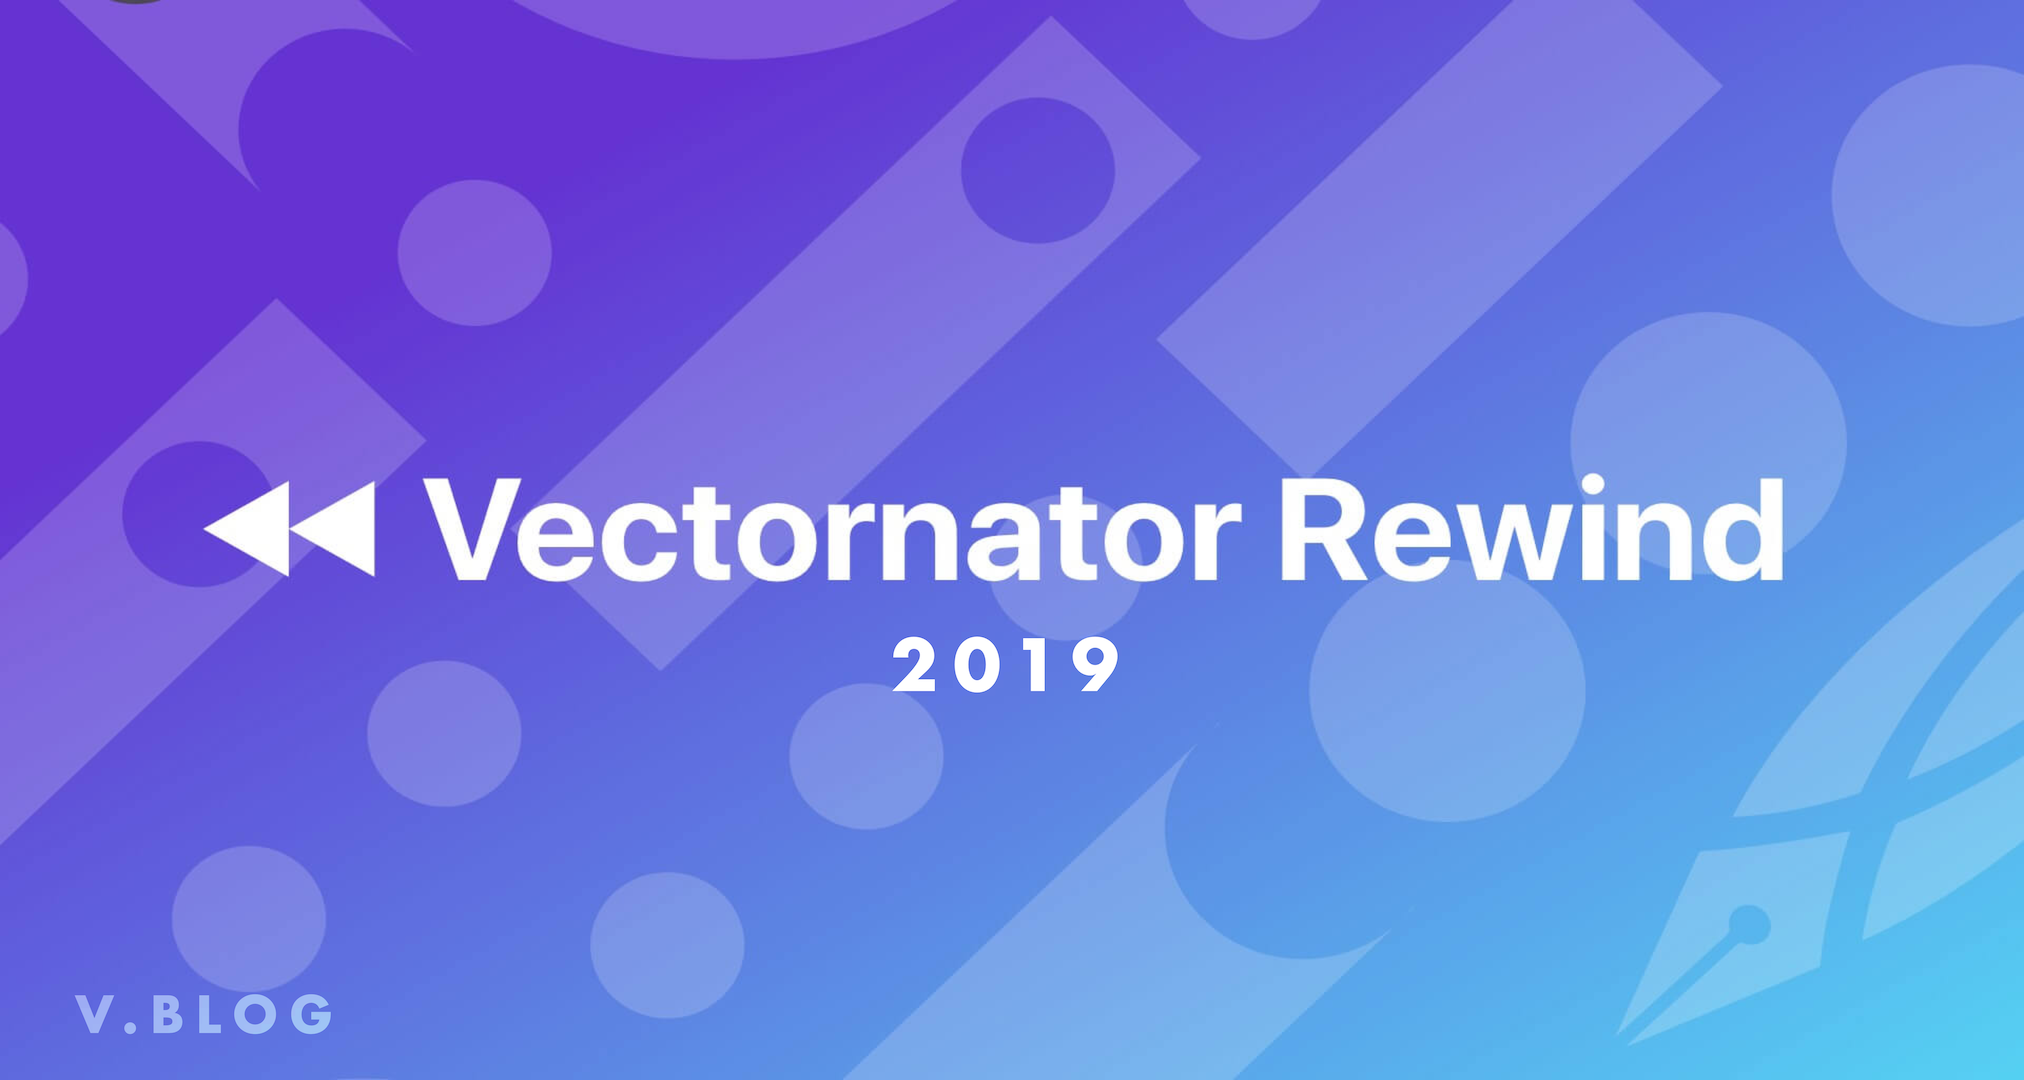 Vectornator Rewind: 2019